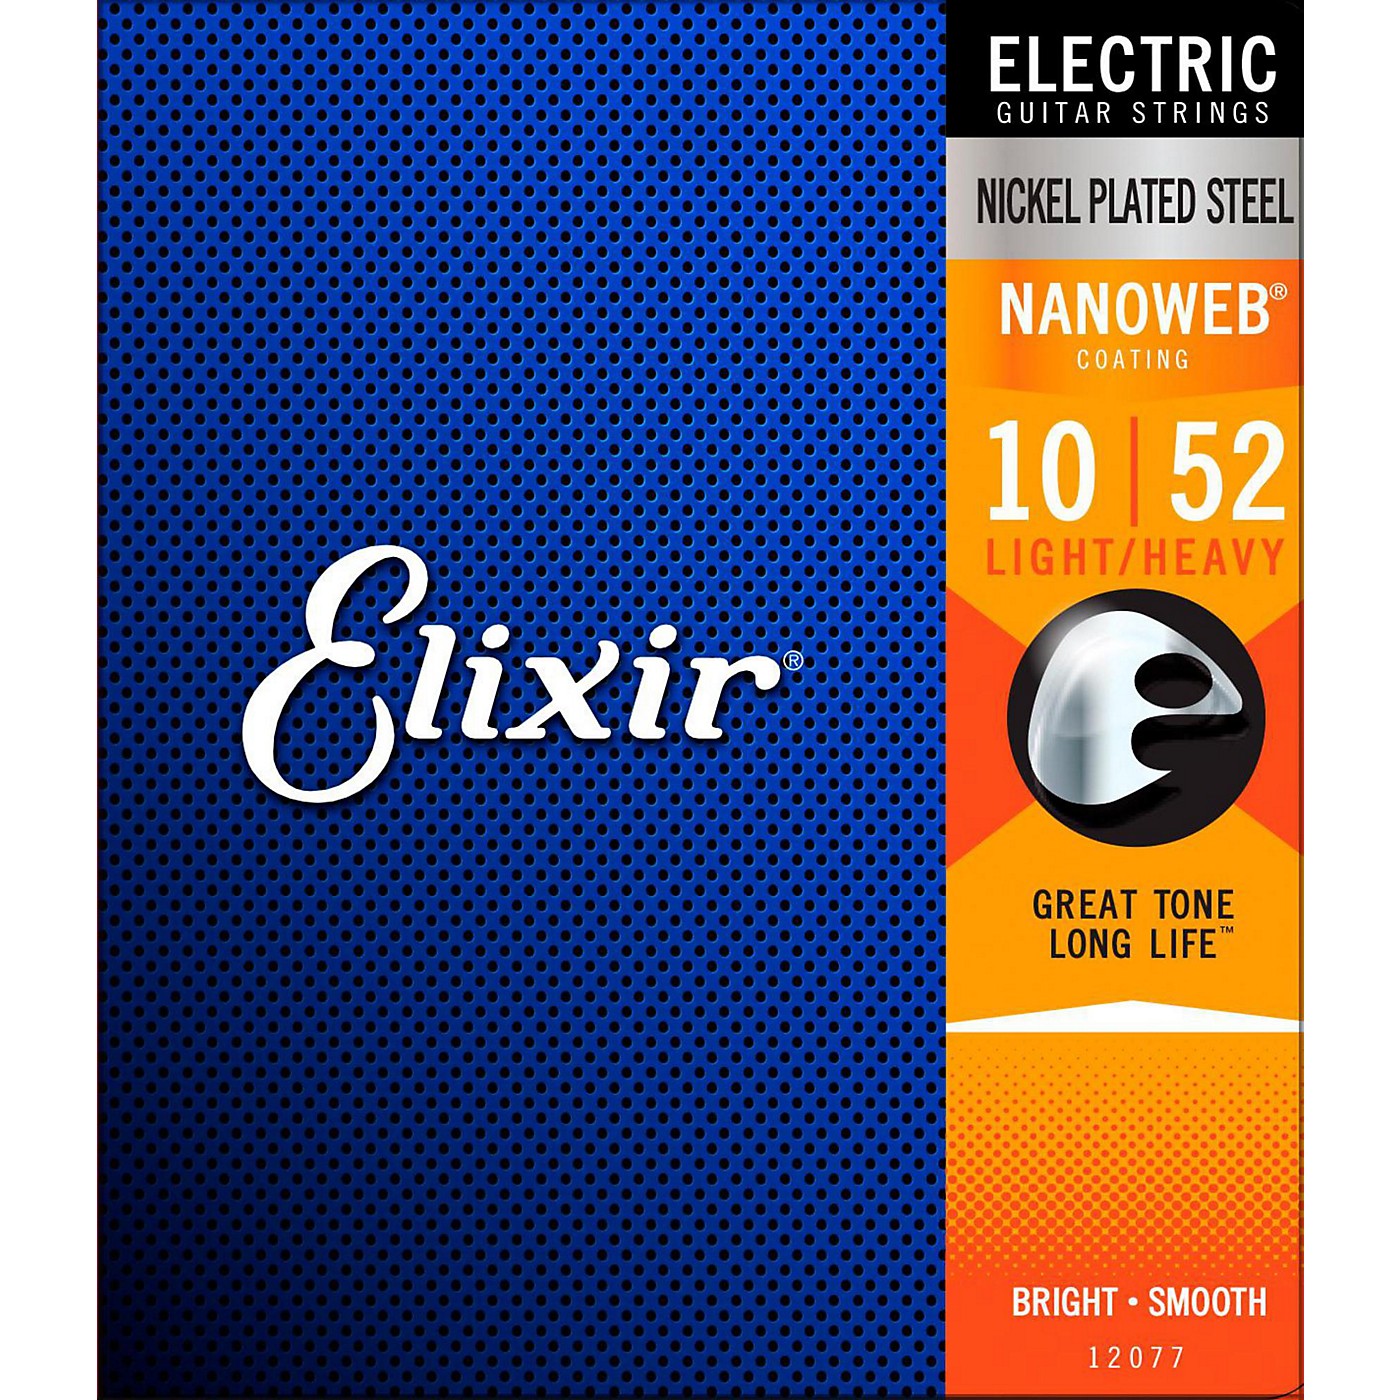 Elixir Electric Guitar Strings with NANOWEB Coating, Light/Heavy (.010-.052) thumbnail